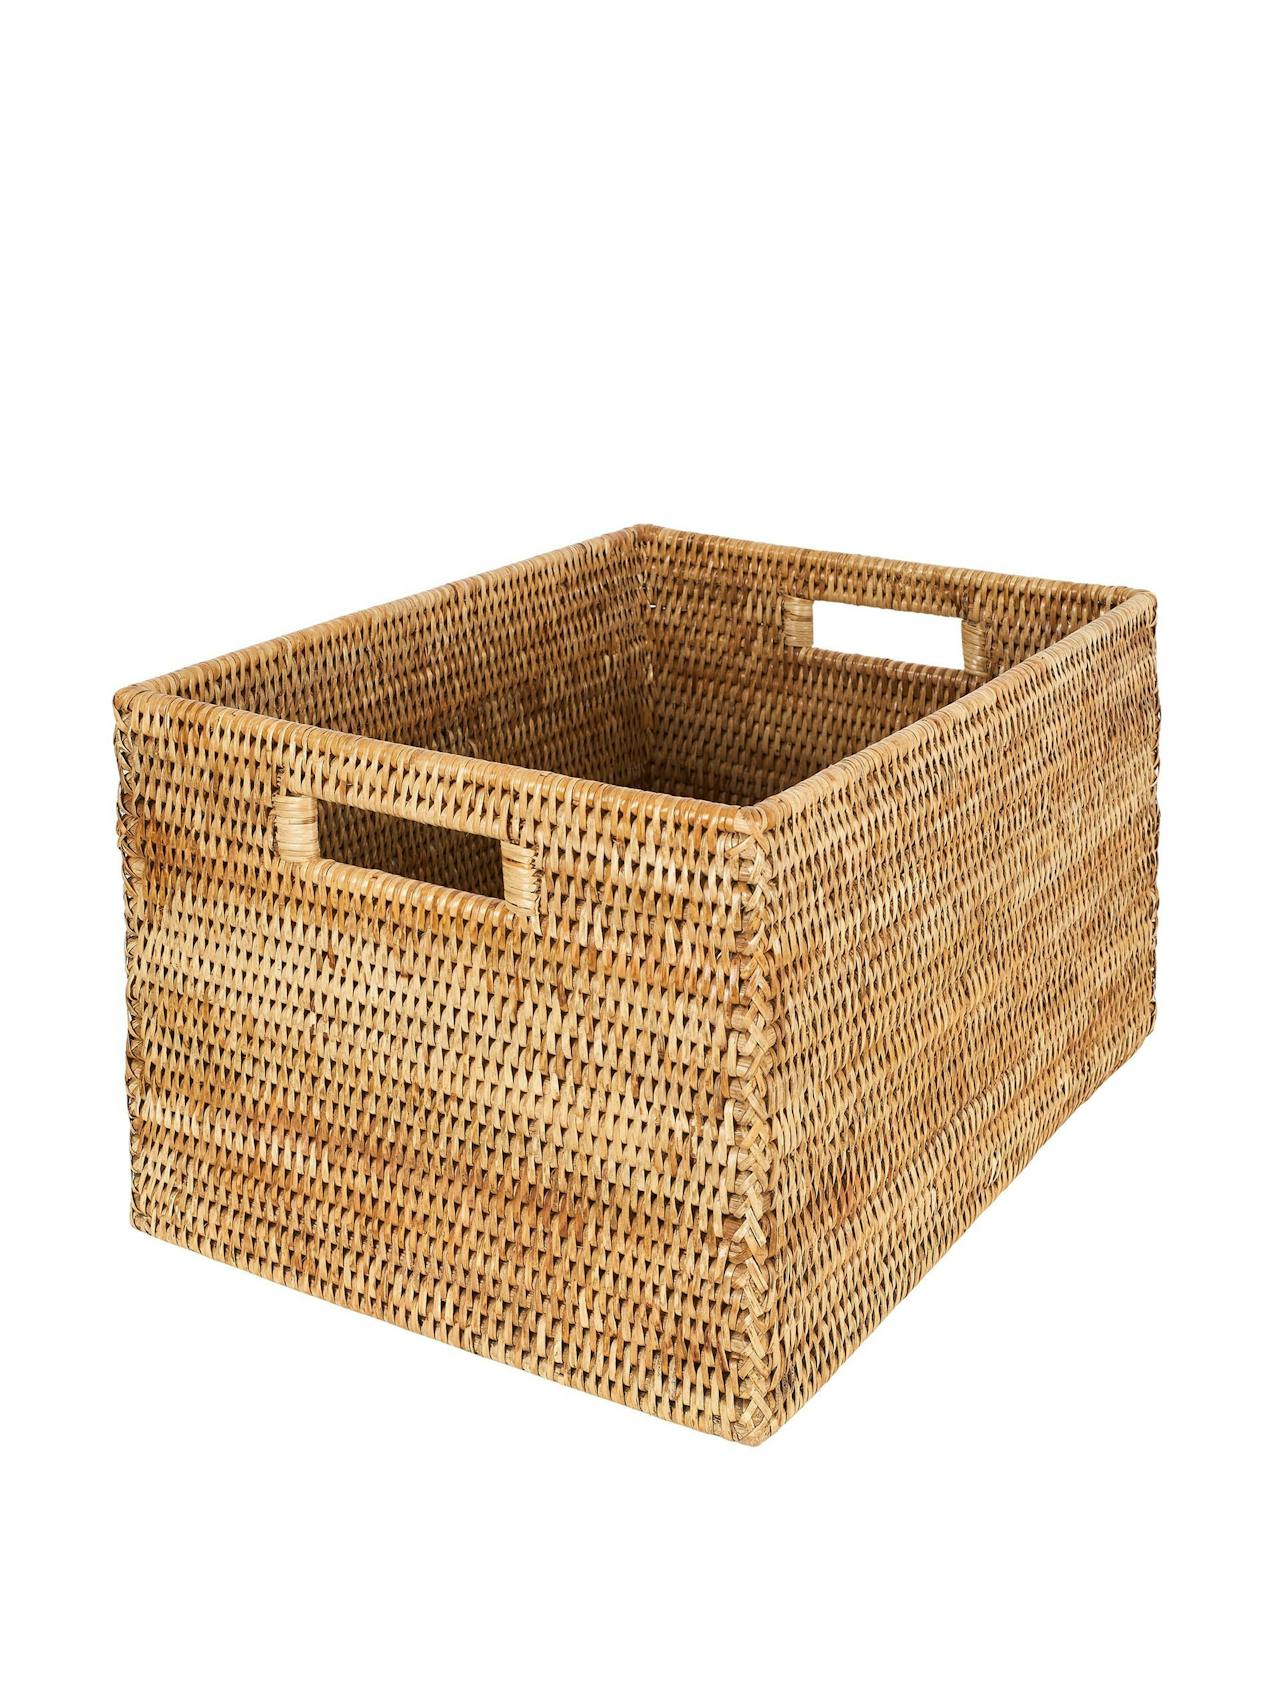 Rattan tall rectangular storage baskets in natural